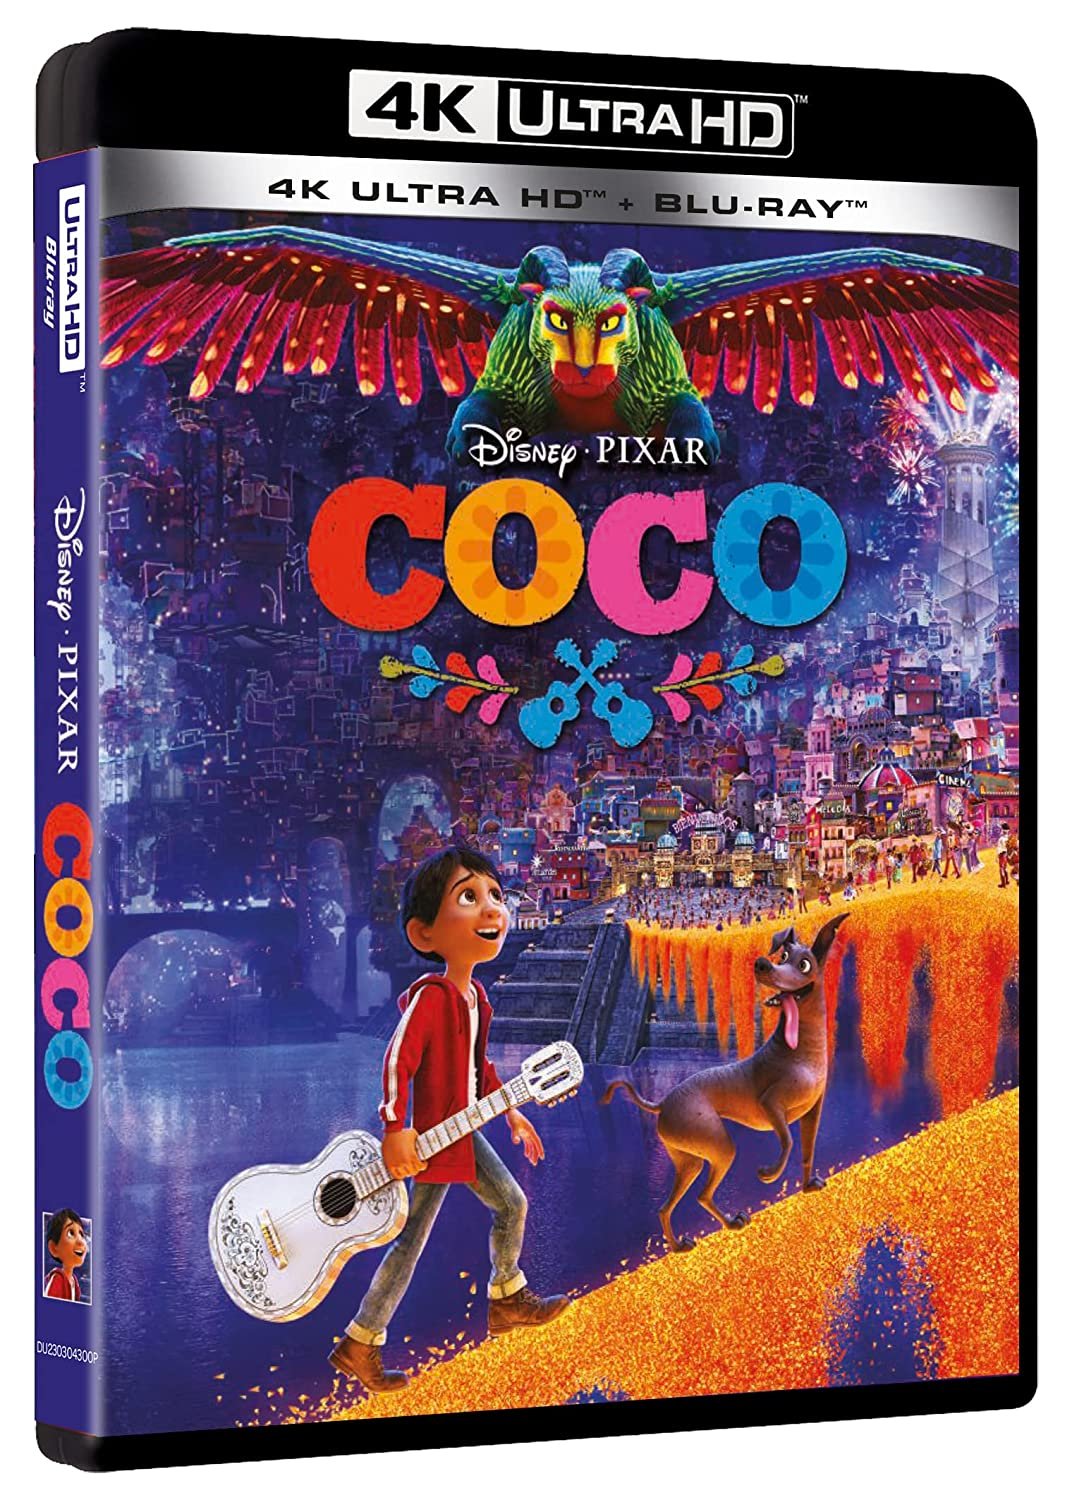 Coco' llegará en 4K Ultra HD a España | En tu pantalla